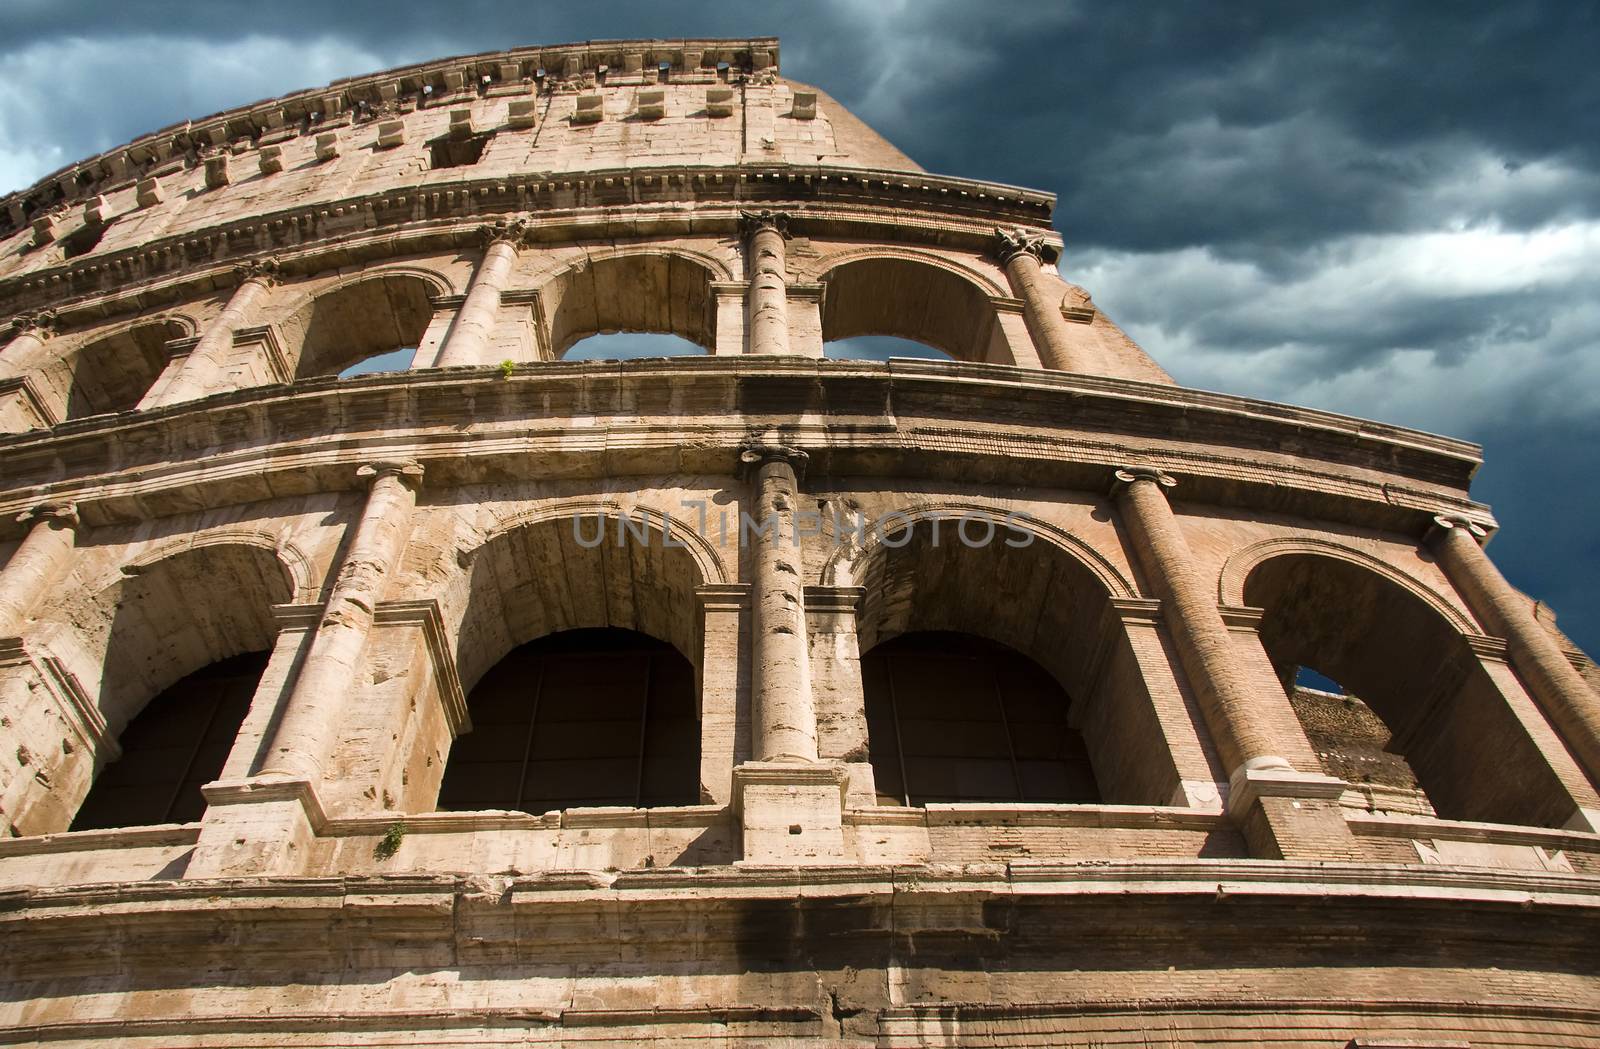 Colosseum ancient amphitheatre in Rome by fotoecho